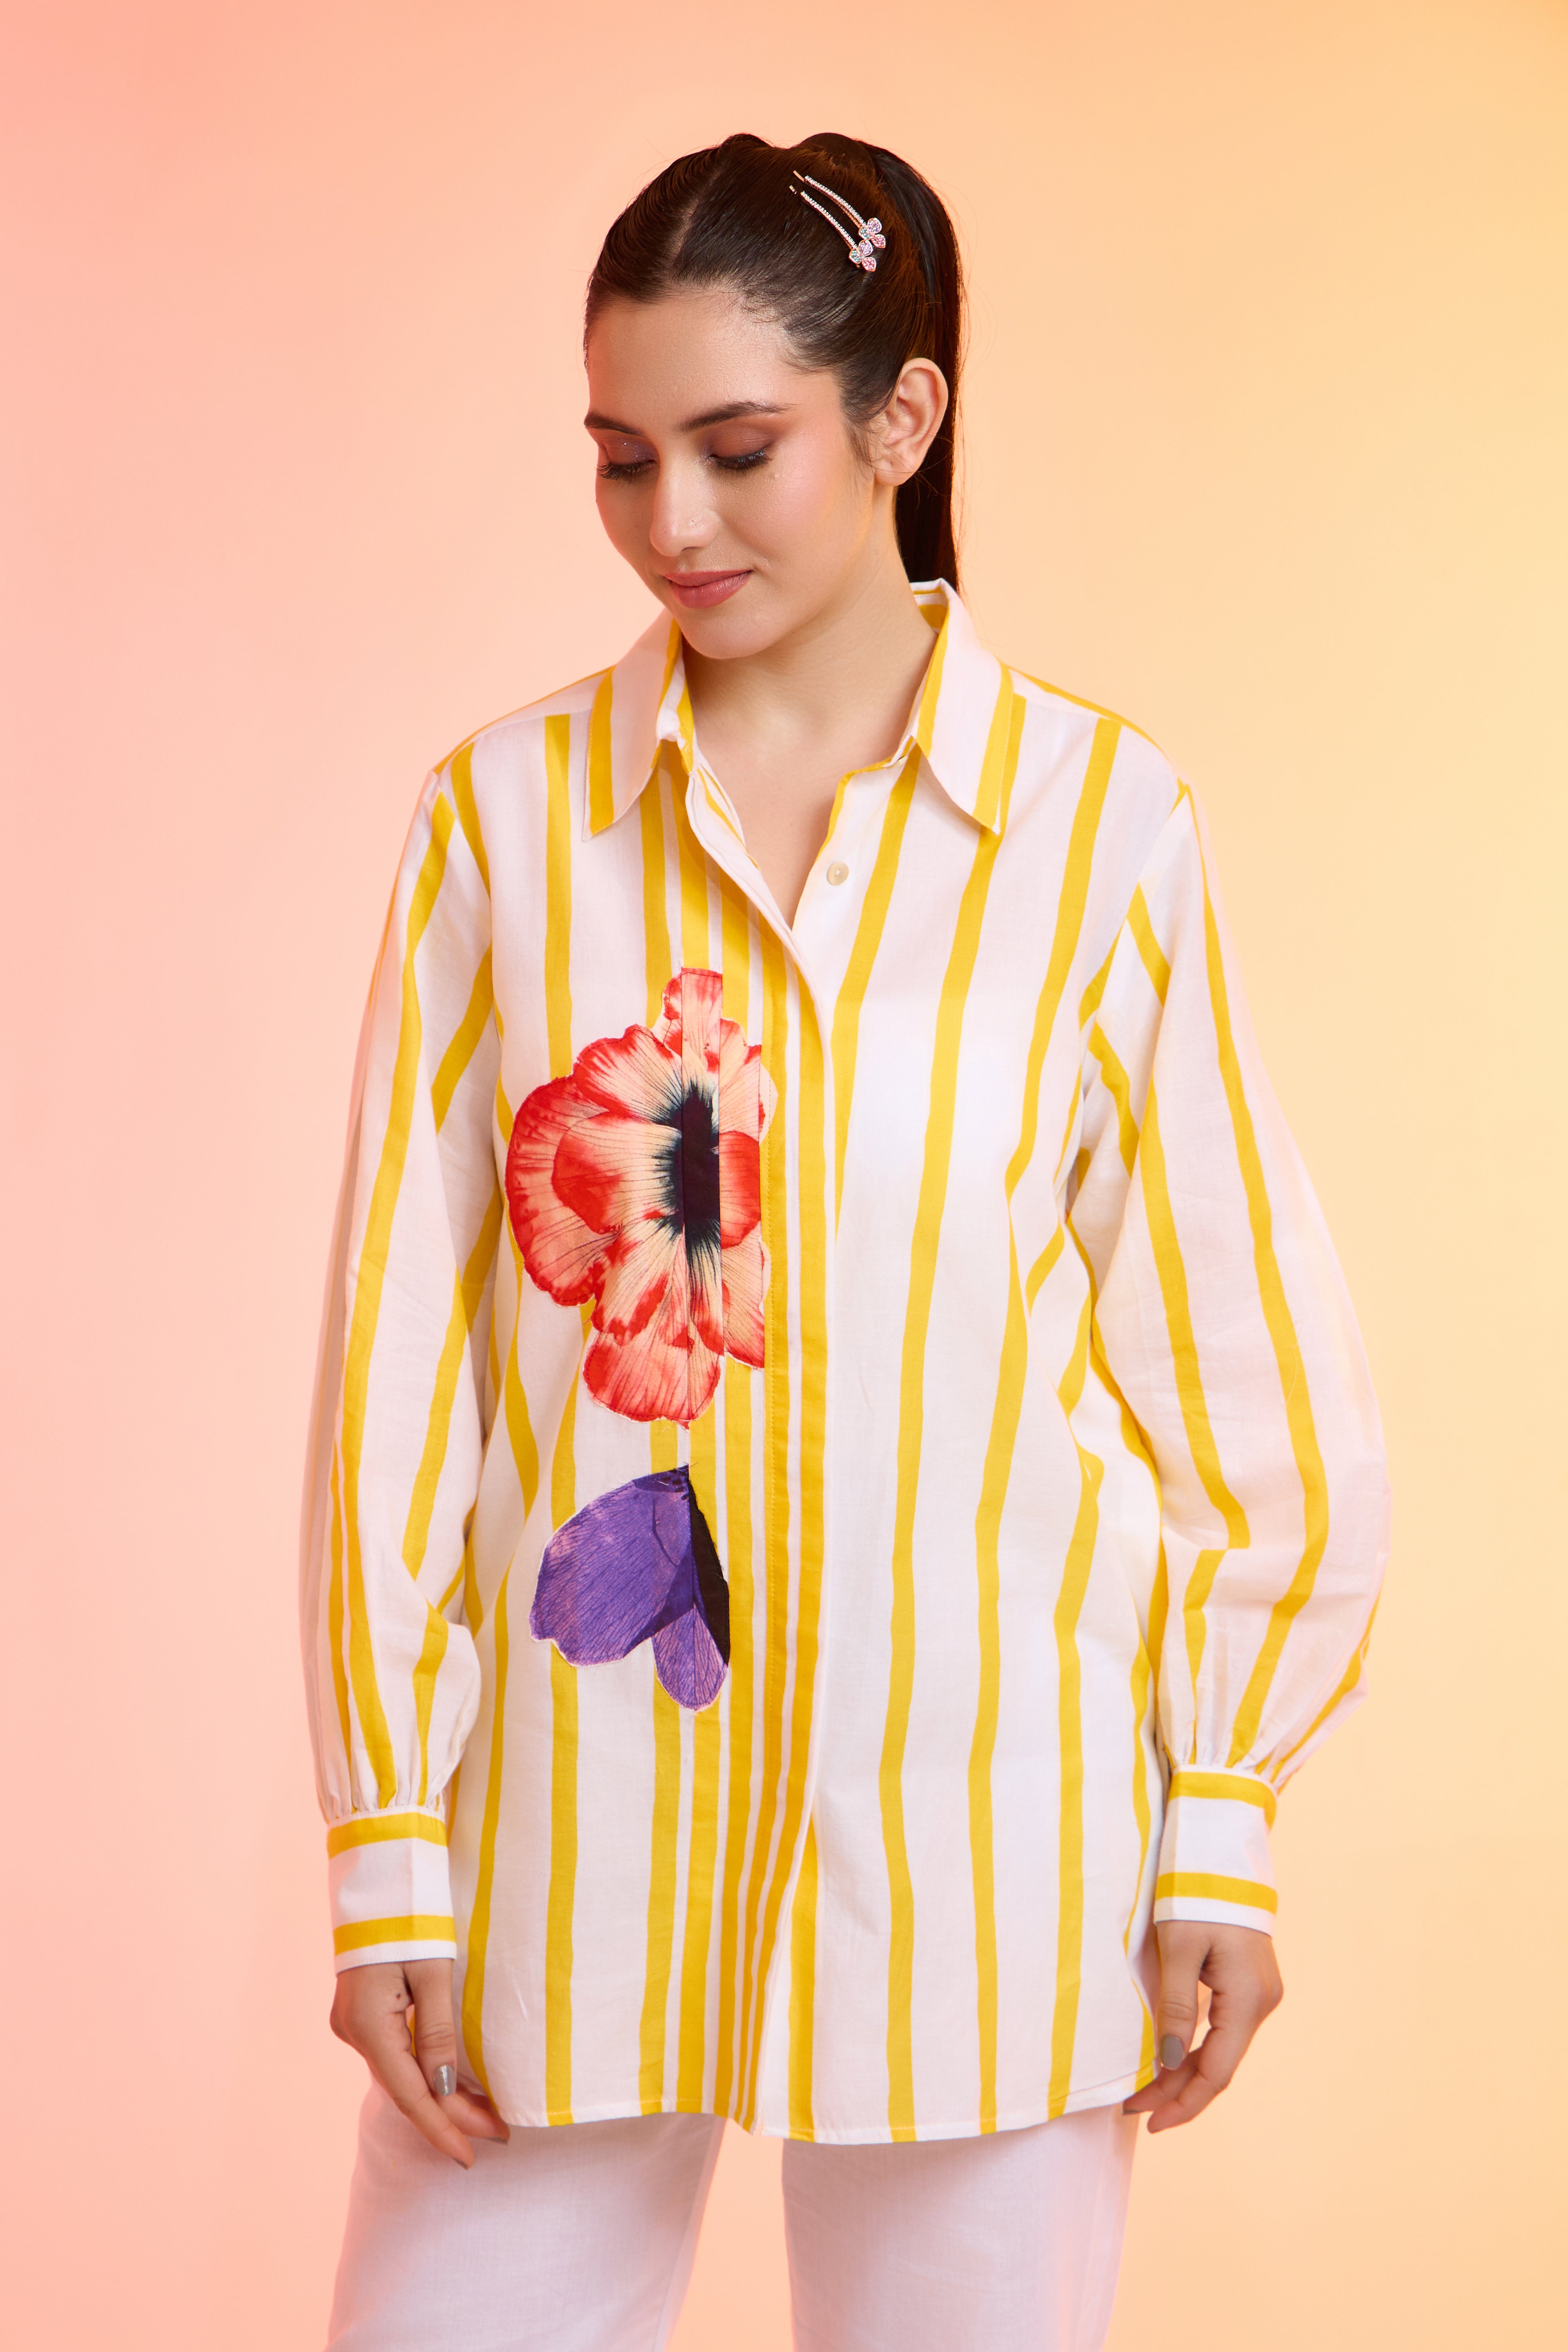 MYSTRIPE printed yellow cotton shirt